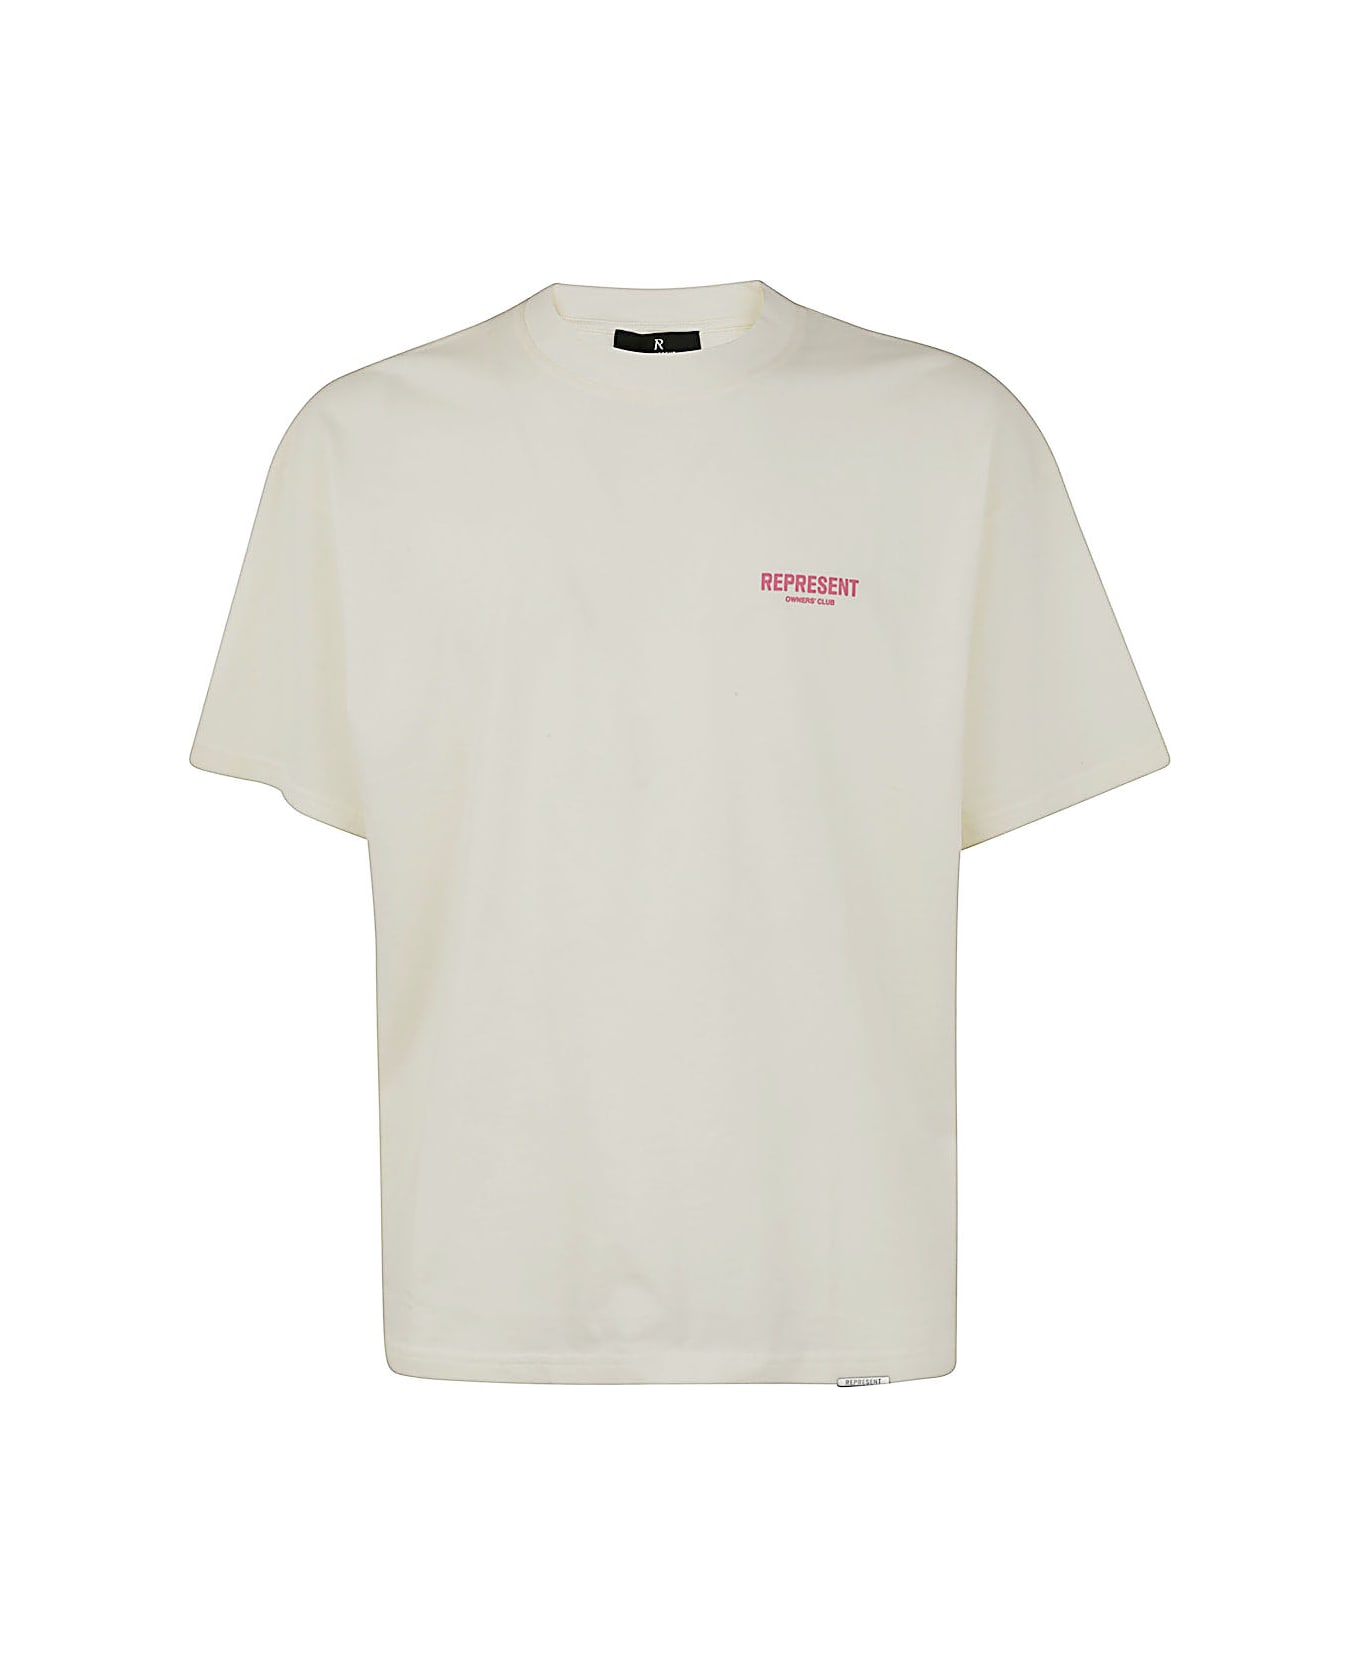 REPRESENT Owners Club T-shirt - White Bubblegum Pink